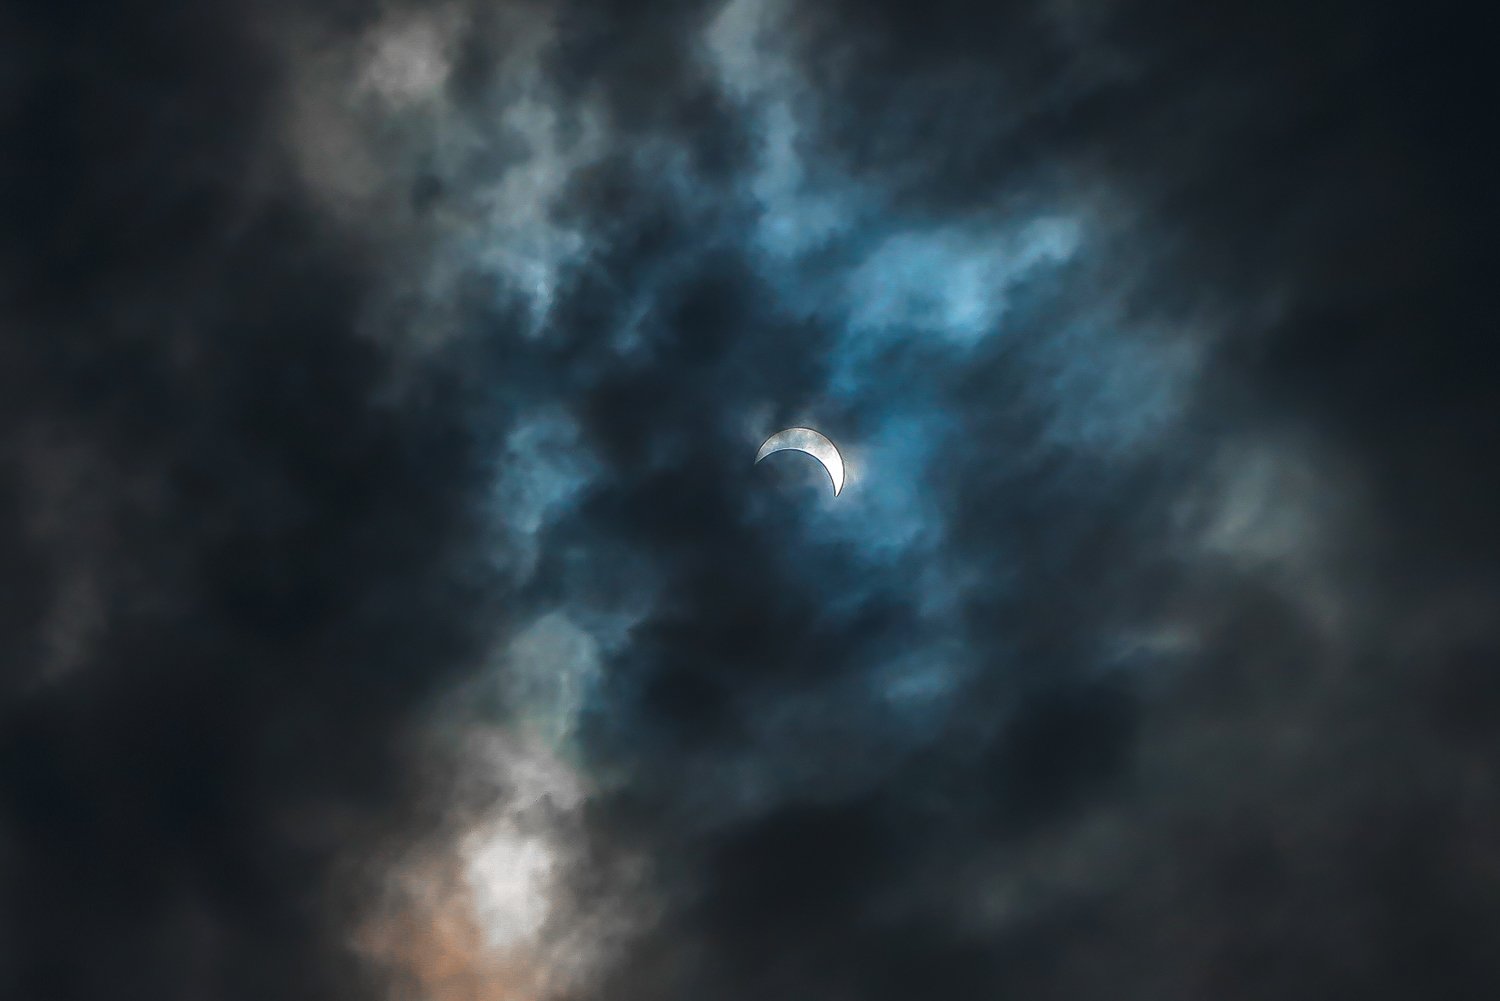  Partial solar eclipse - 2017 